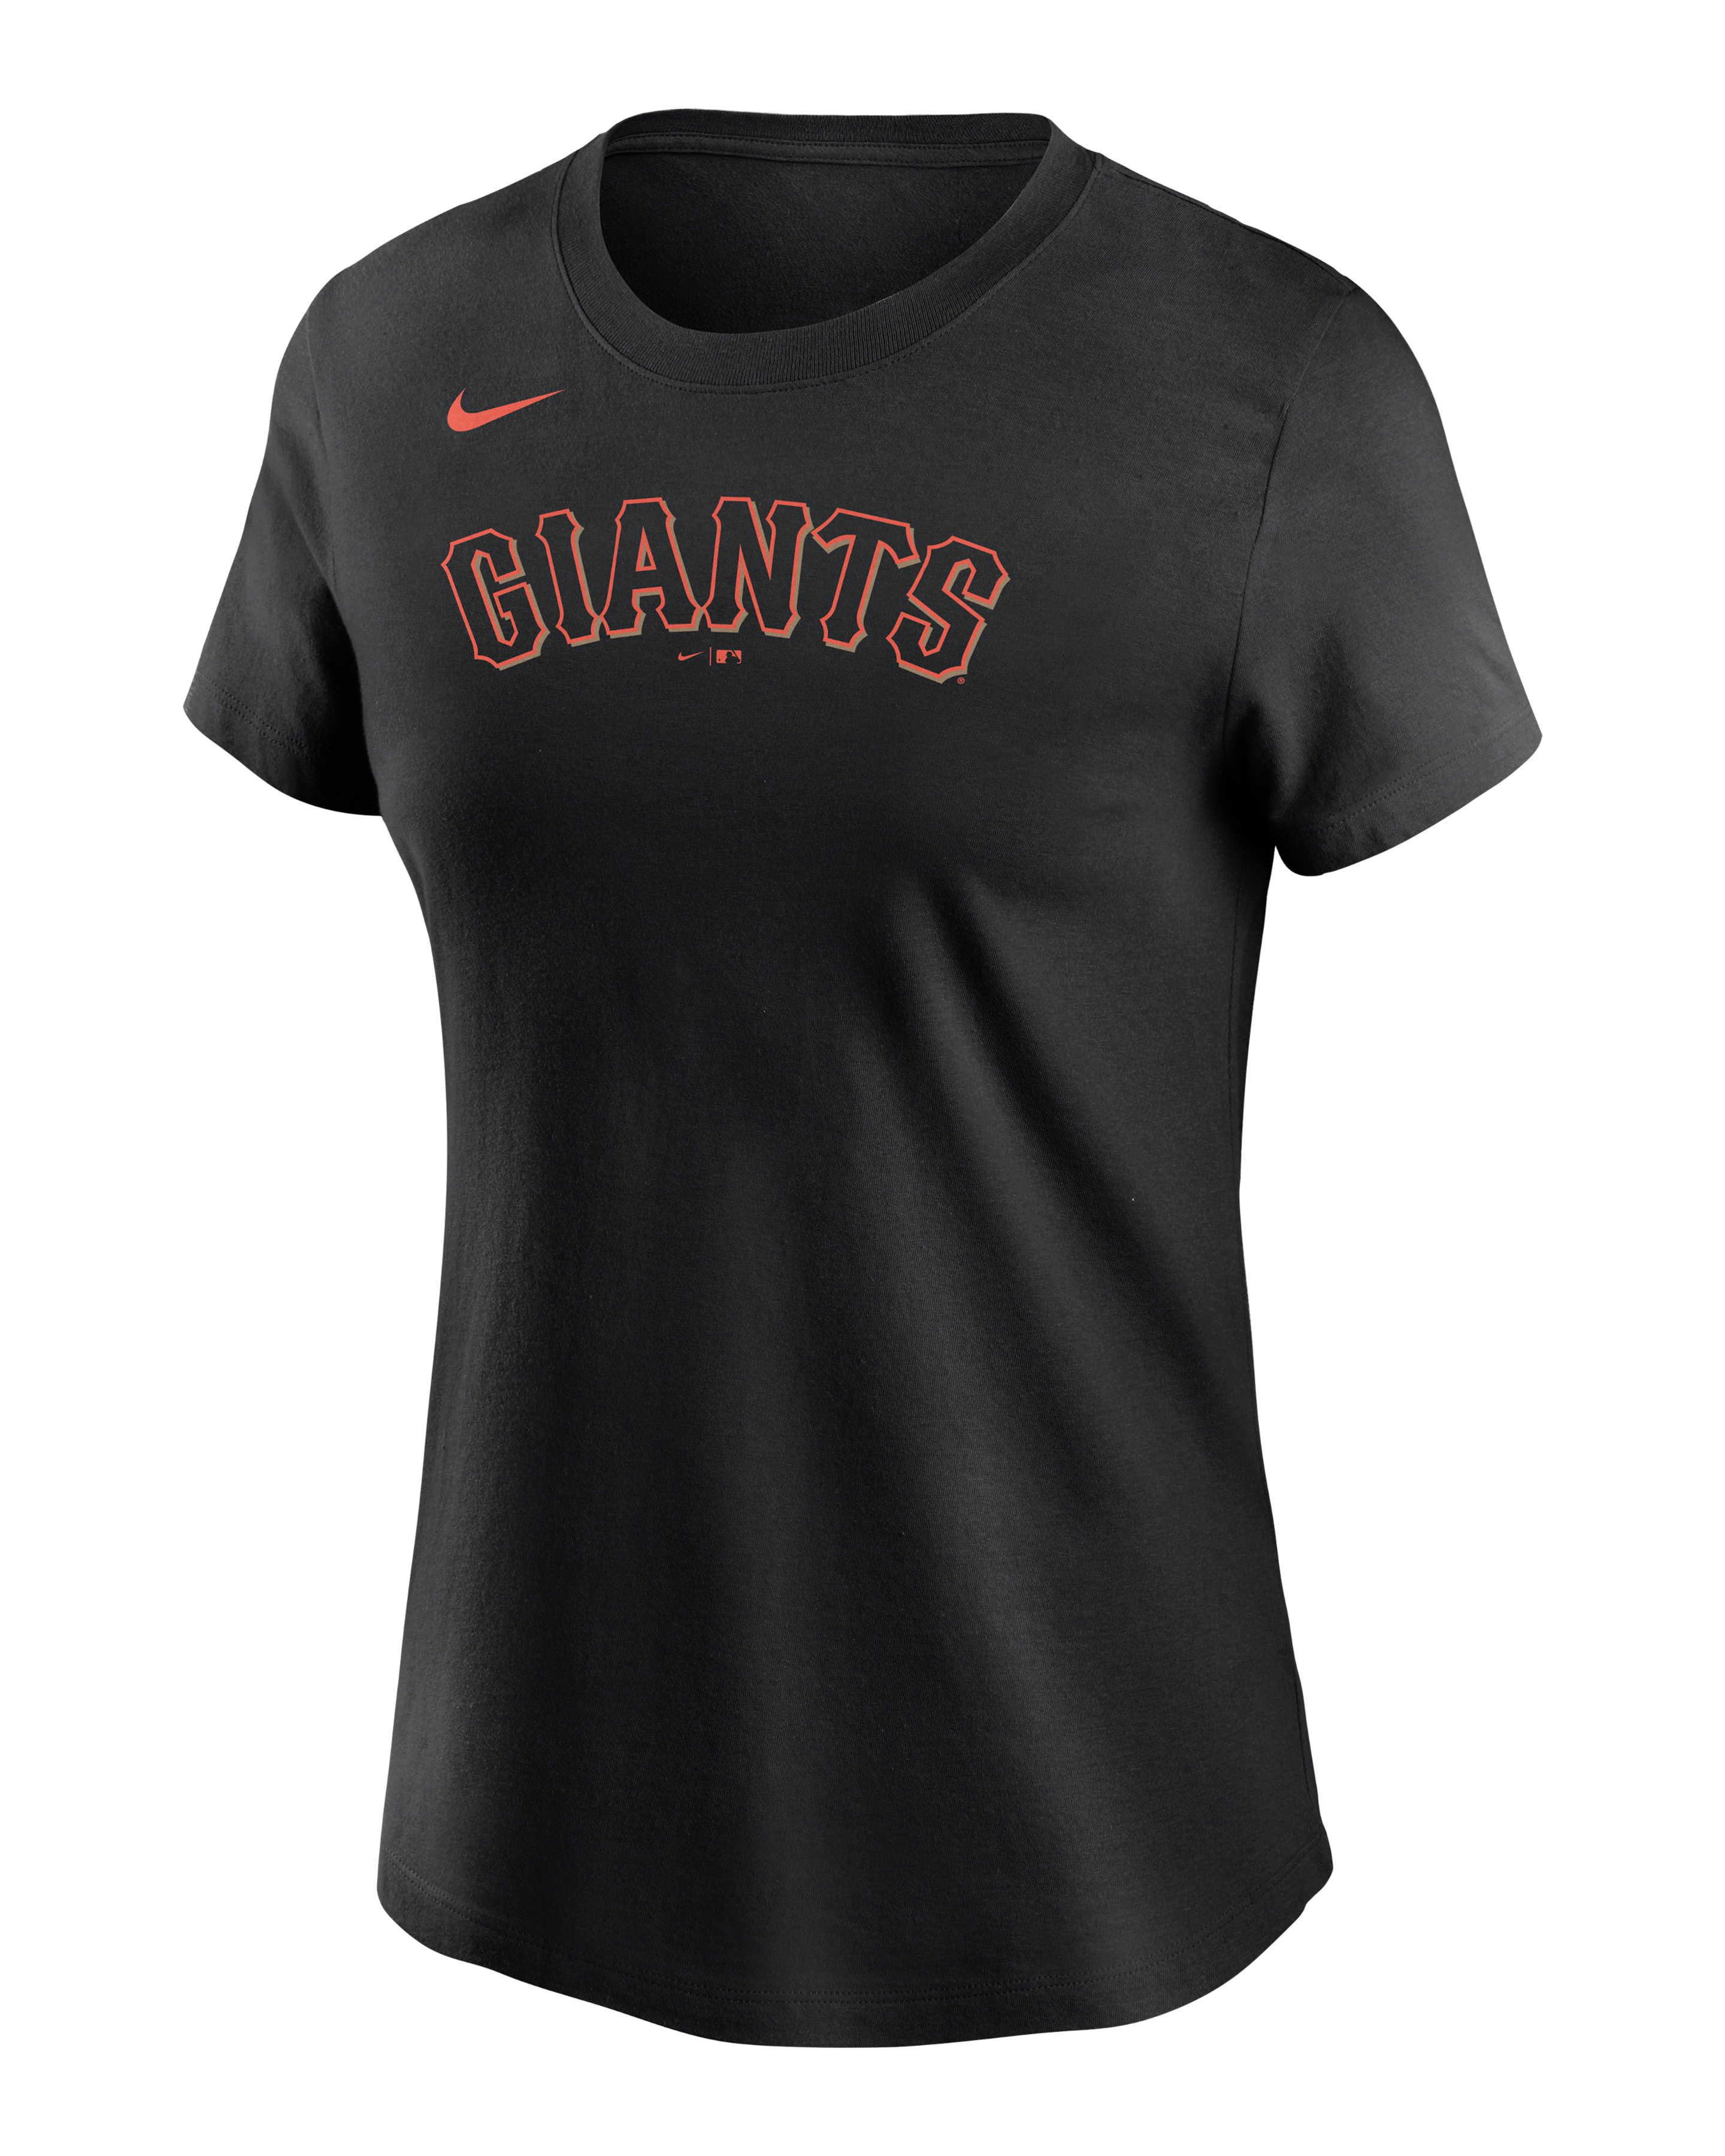 MLB San Francisco Giants (Buster Posey) Women's Replica Baseball Jersey.